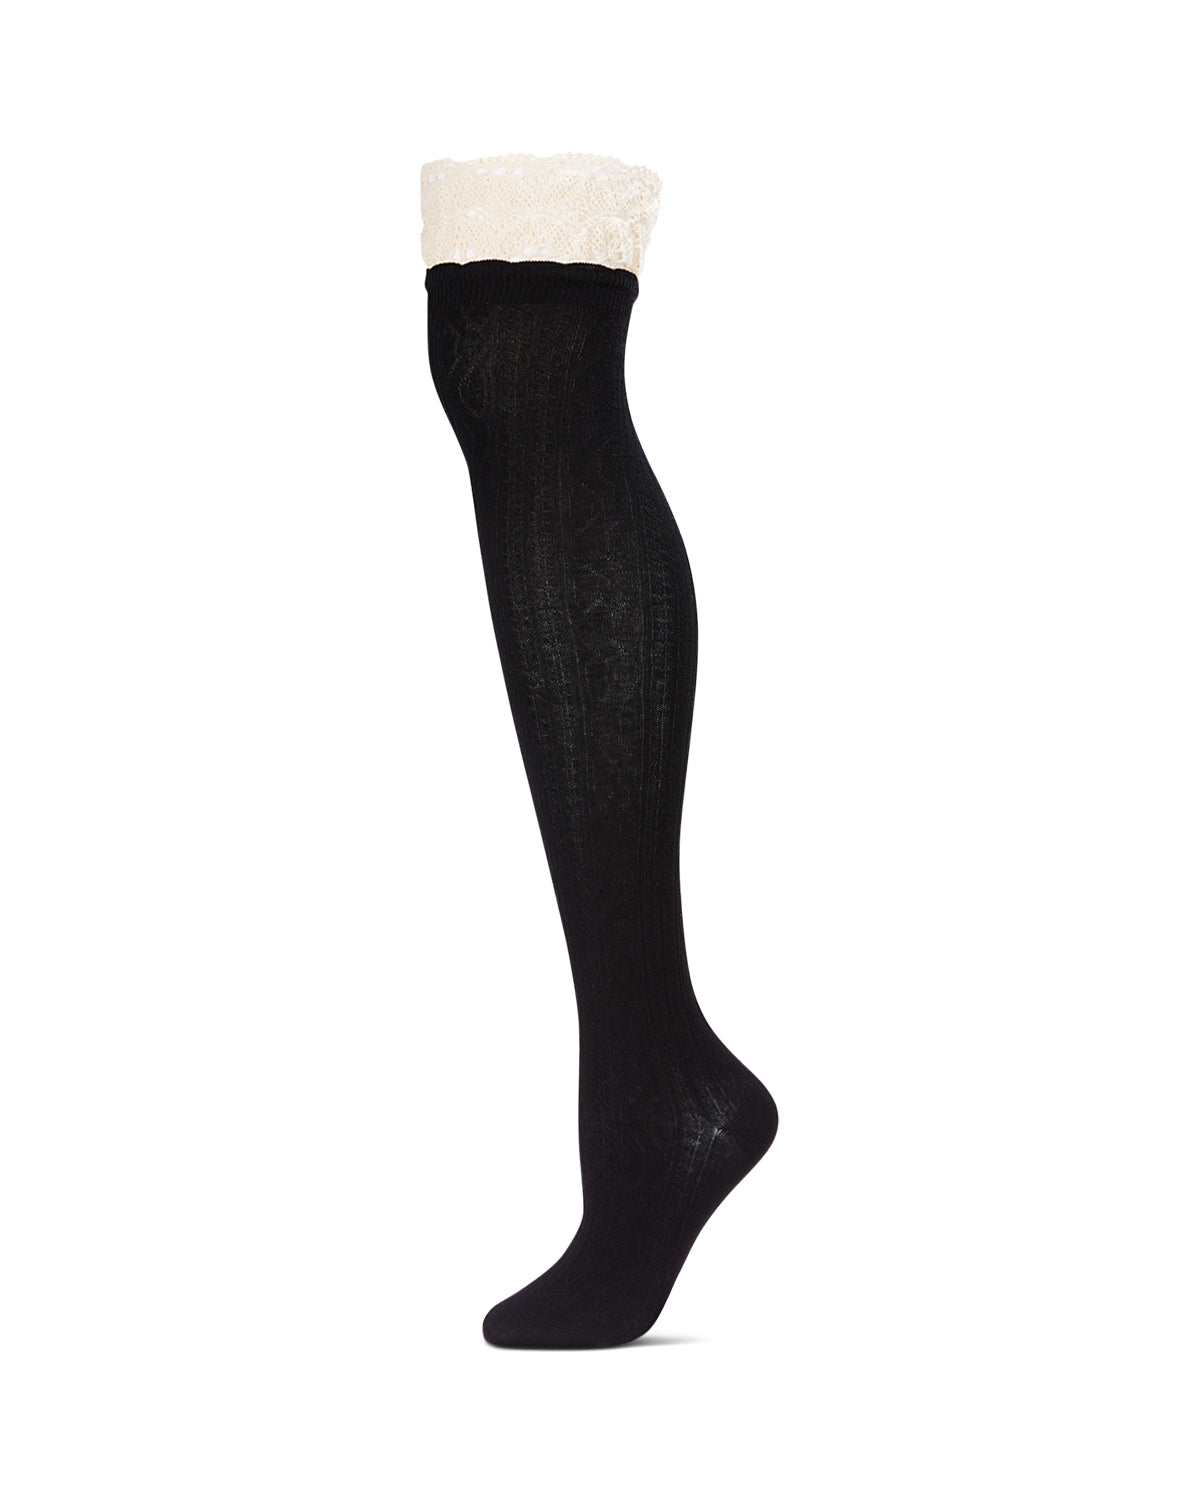 Lace Long Knee Socks Women Autumn Winter Over Knee Thigh High